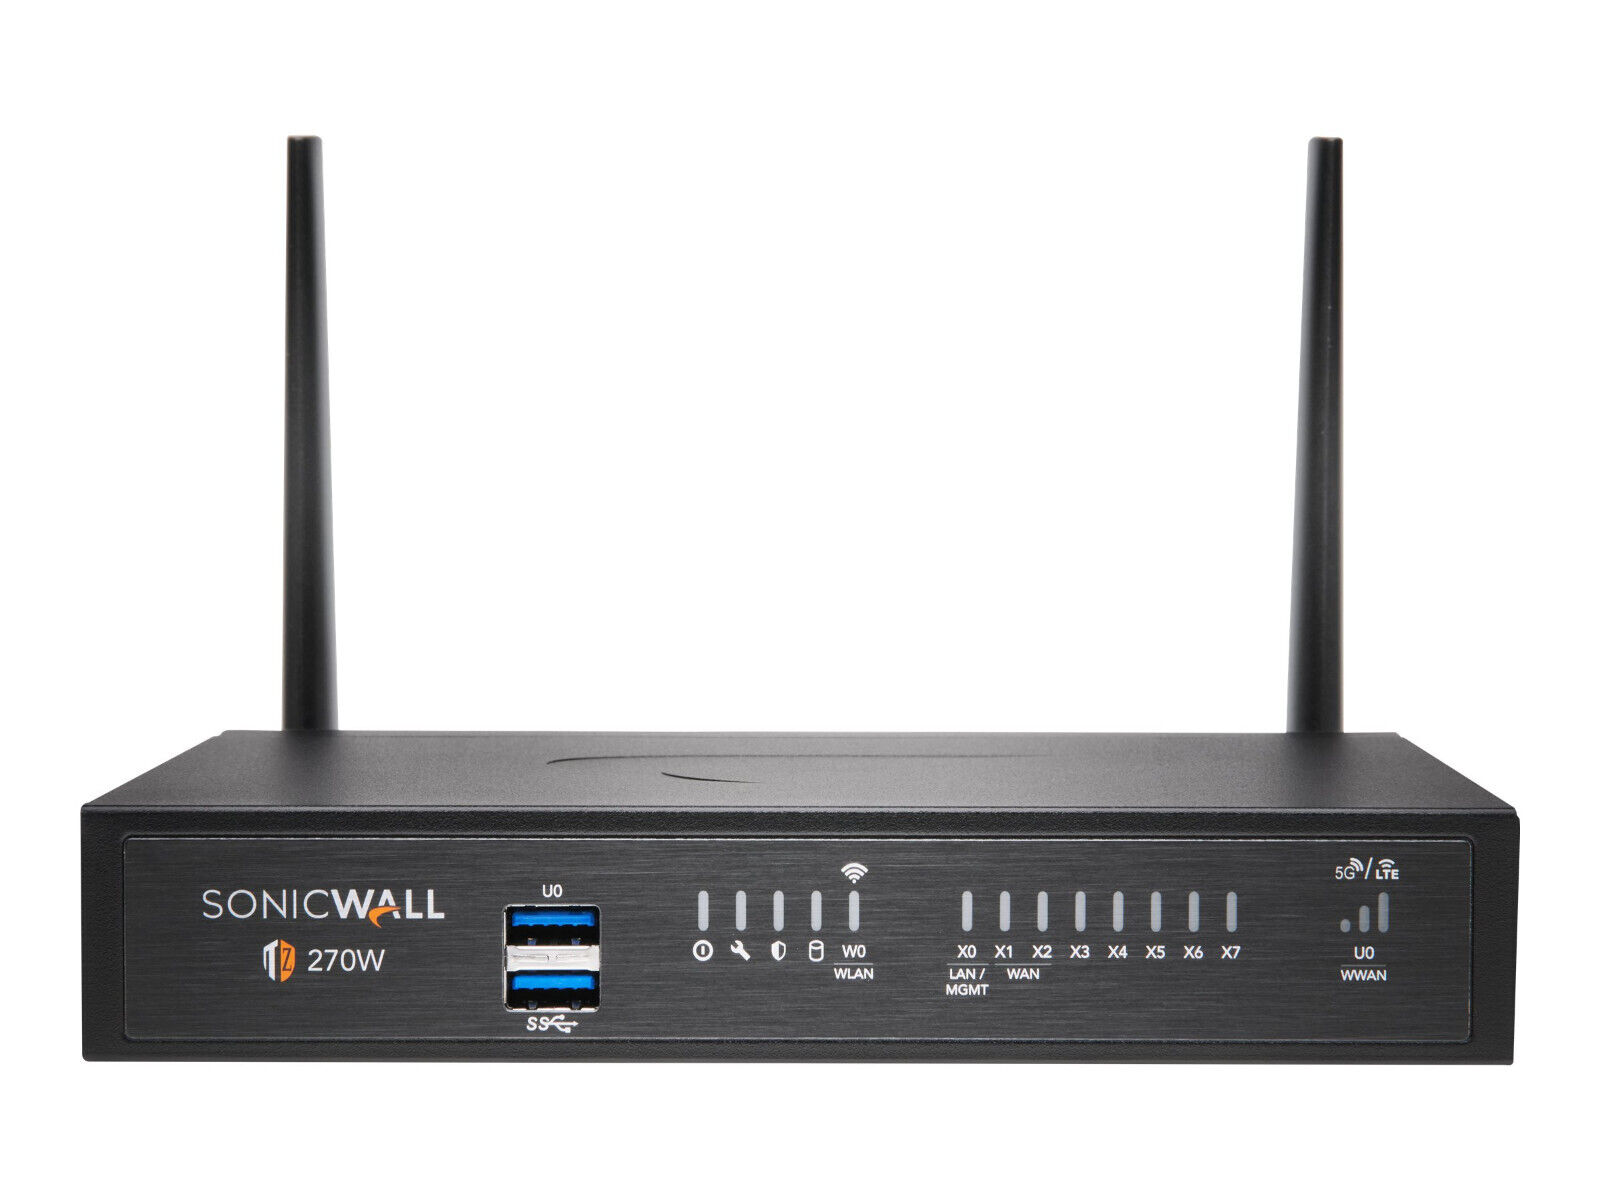 SonicWALL TZ270 Wireless-AC Network Security Firewall  02-SSC-2823  Brand New